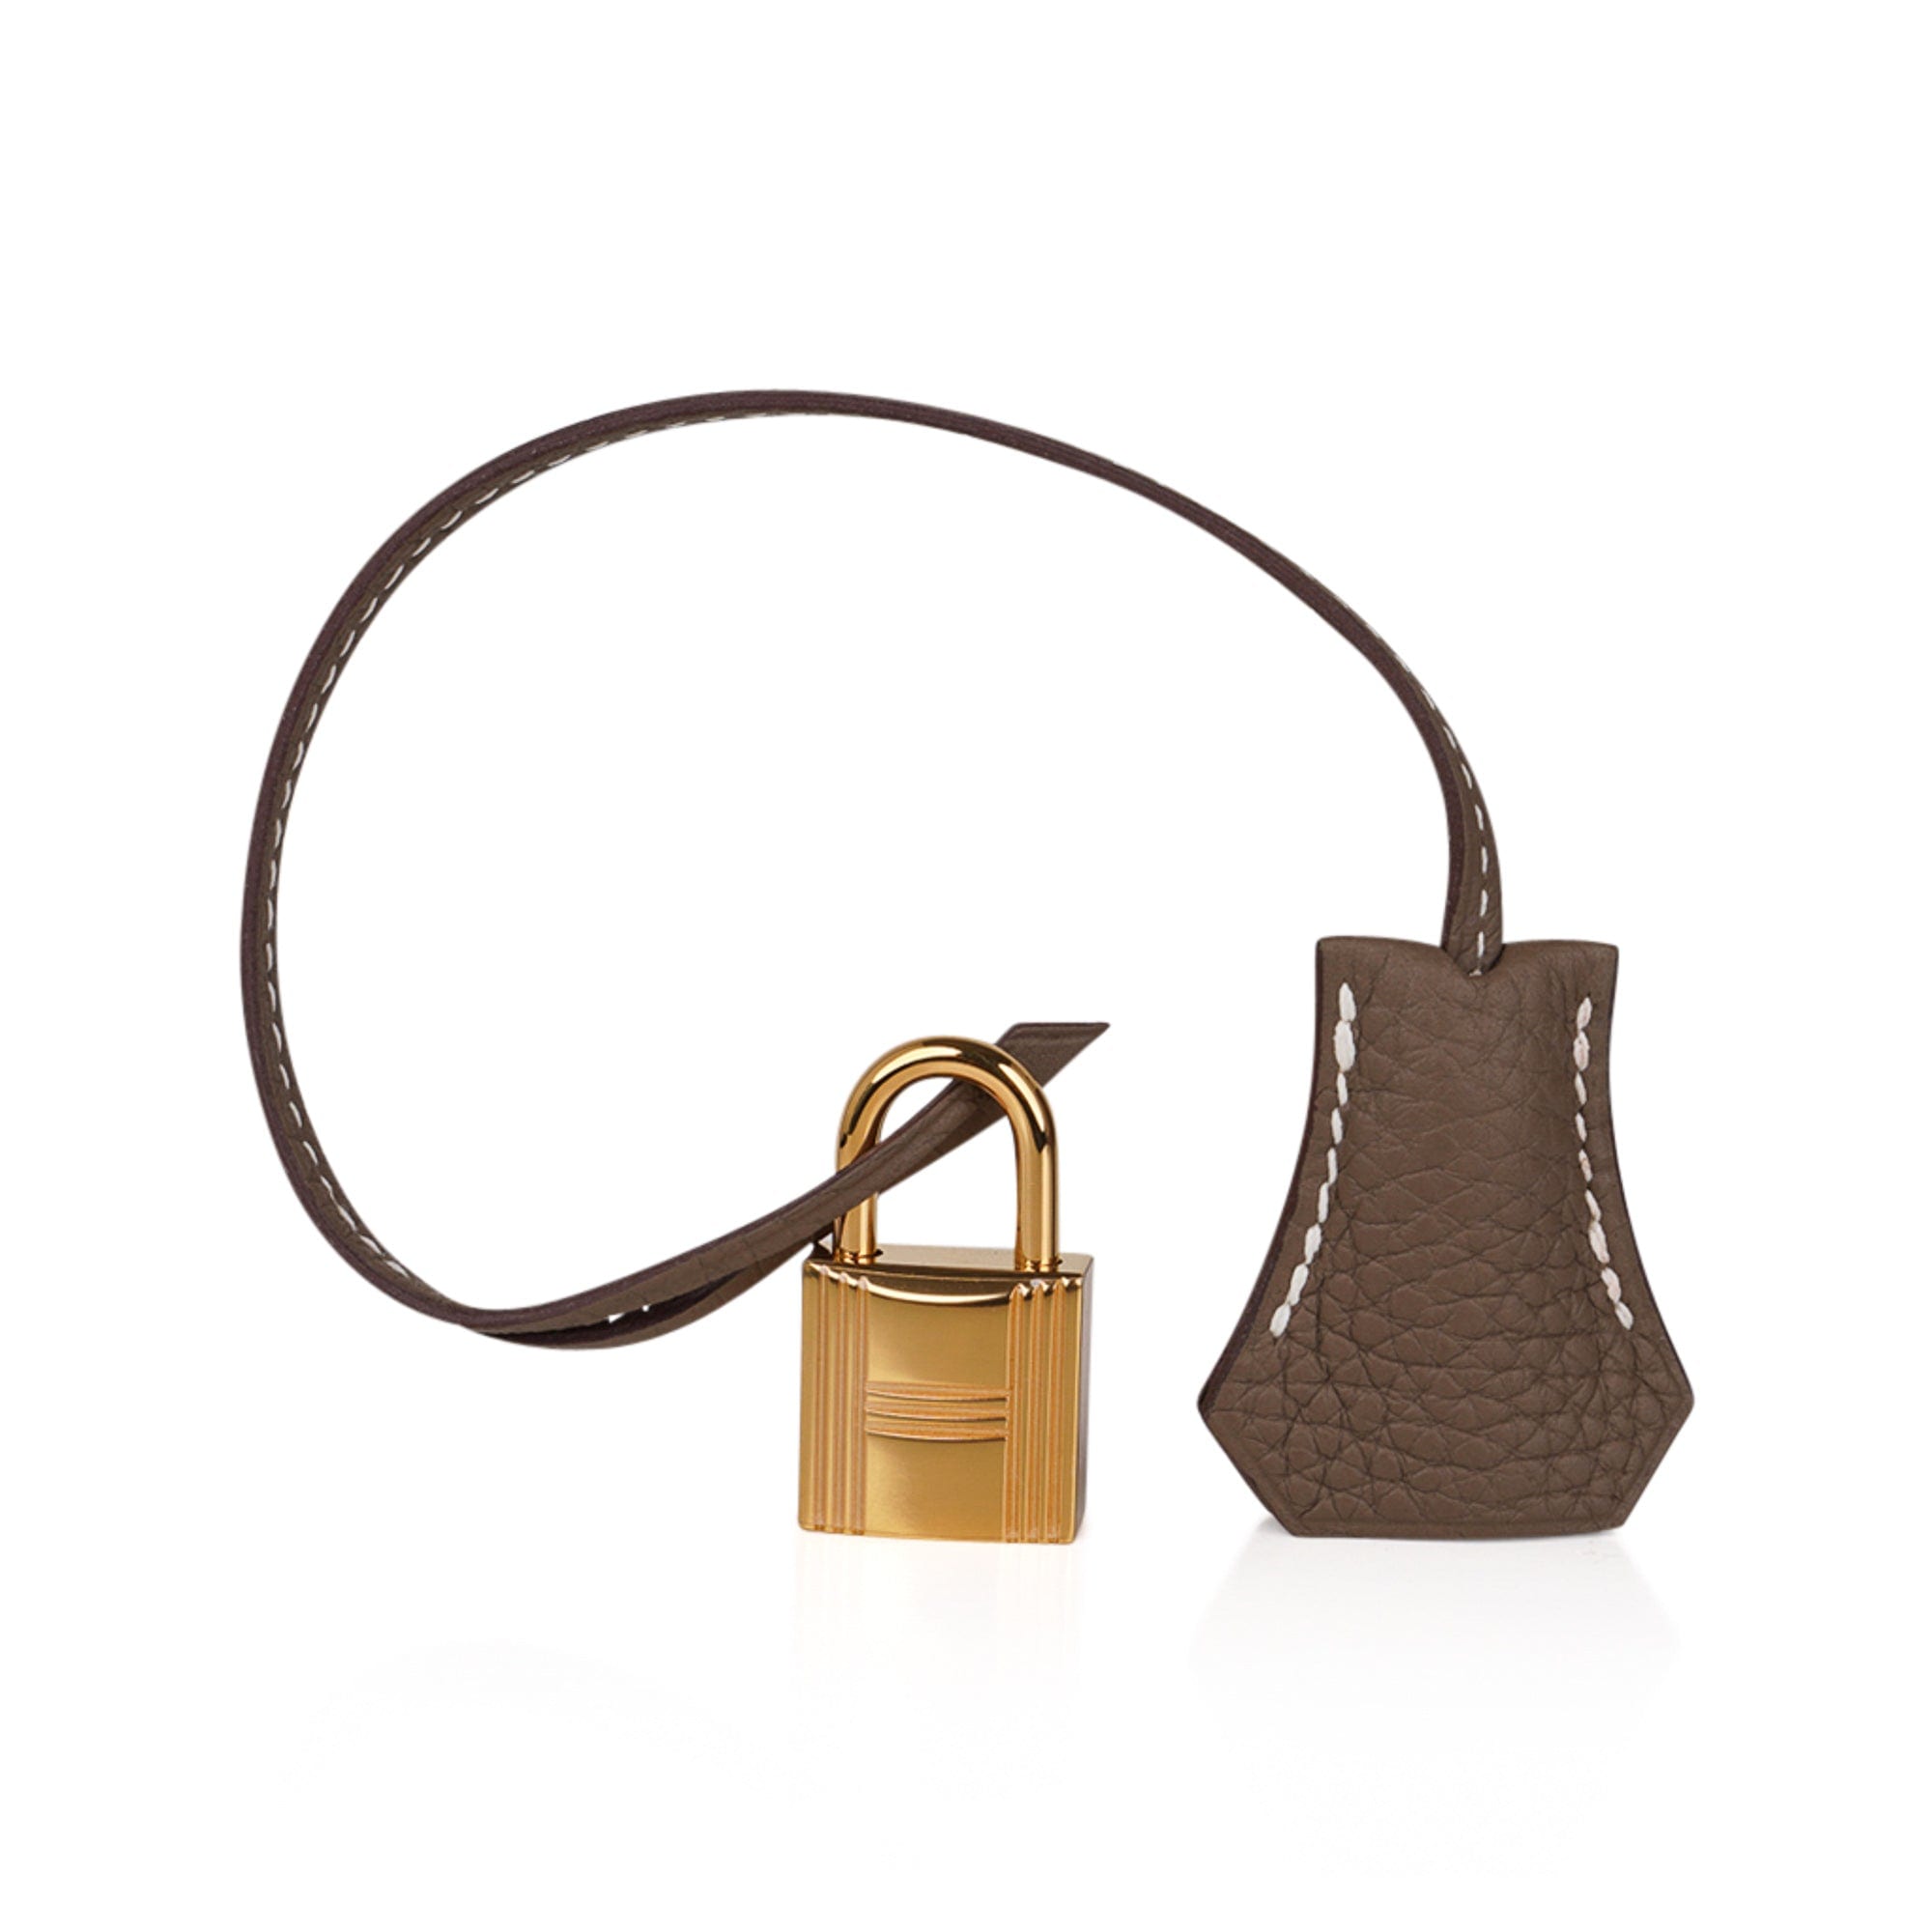 Hermes Birkin 30 Bag Etoupe (Taupe) Gold Hardware Togo Leather